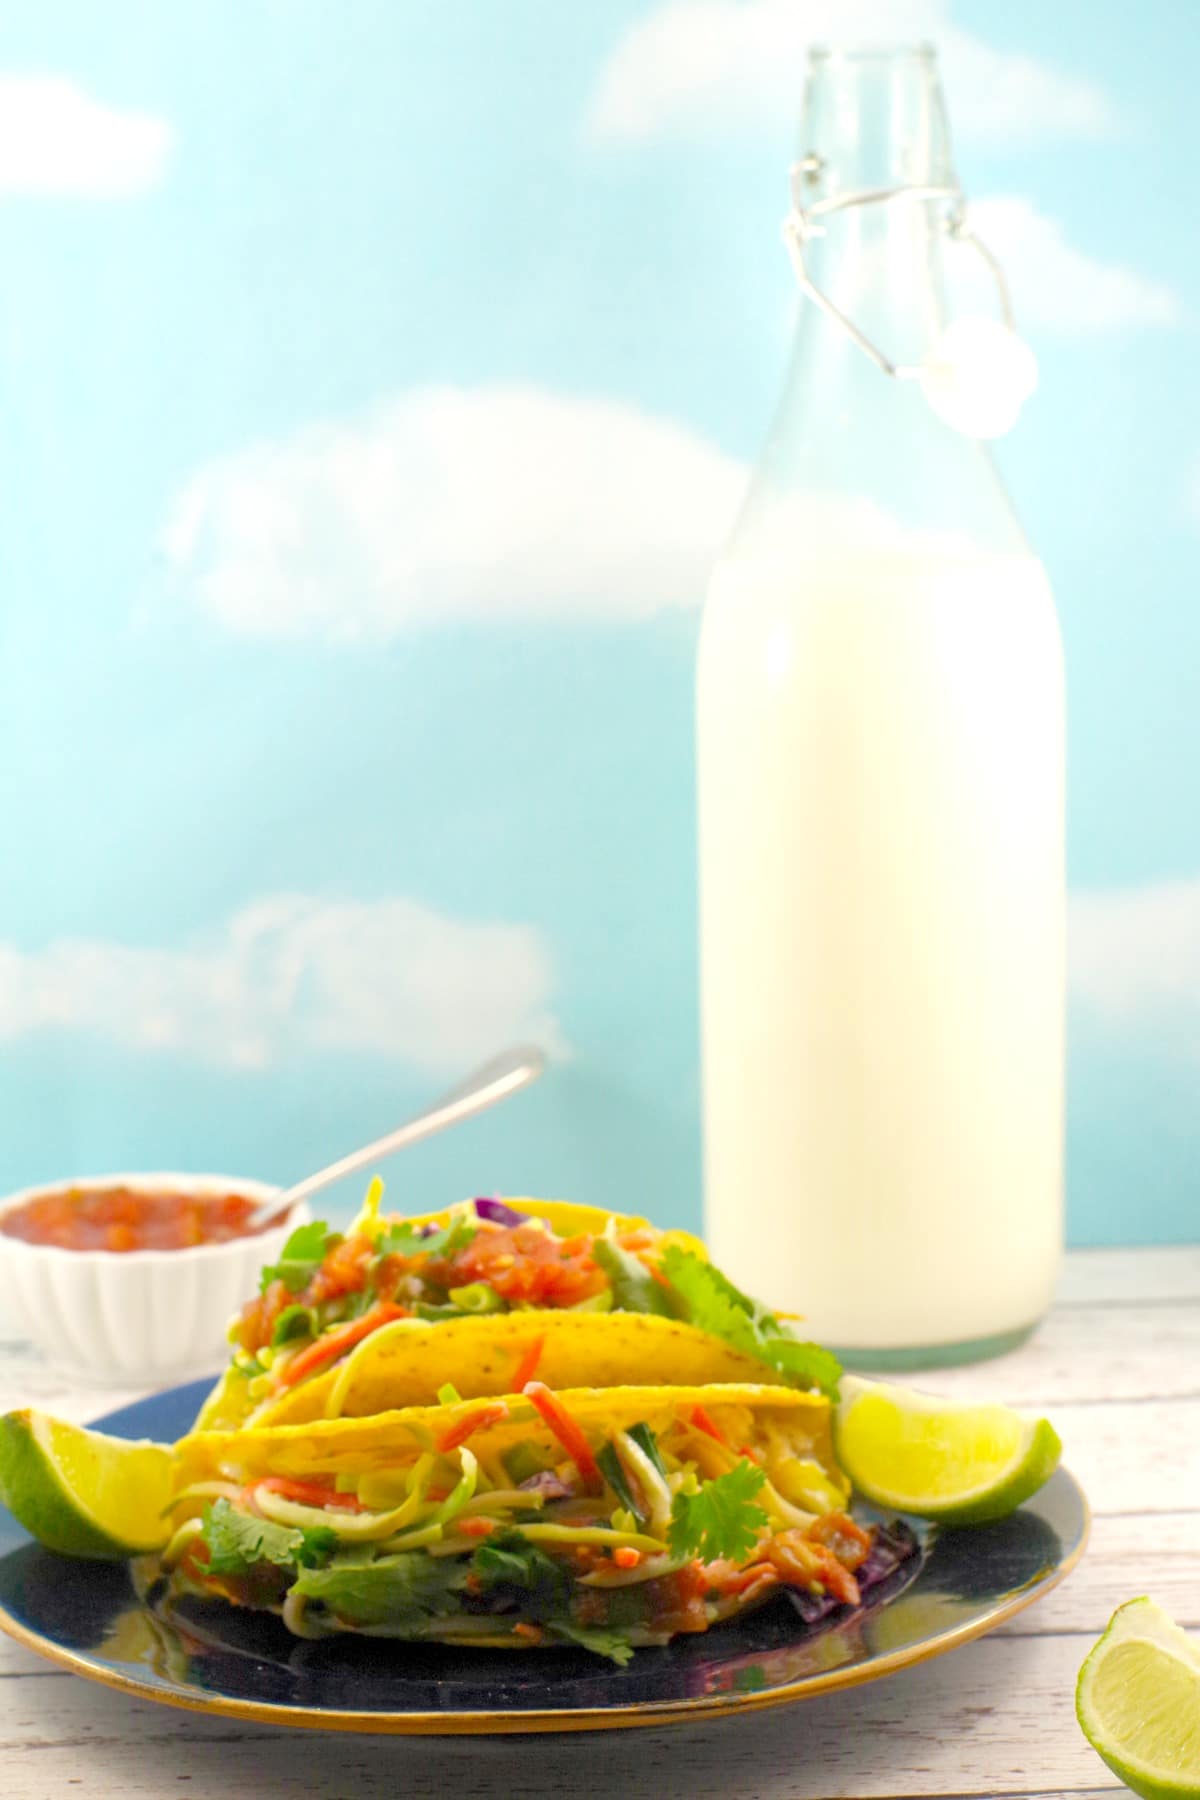 Easy fish tacos with slaw | no fishy taste - foodmeanderings.com